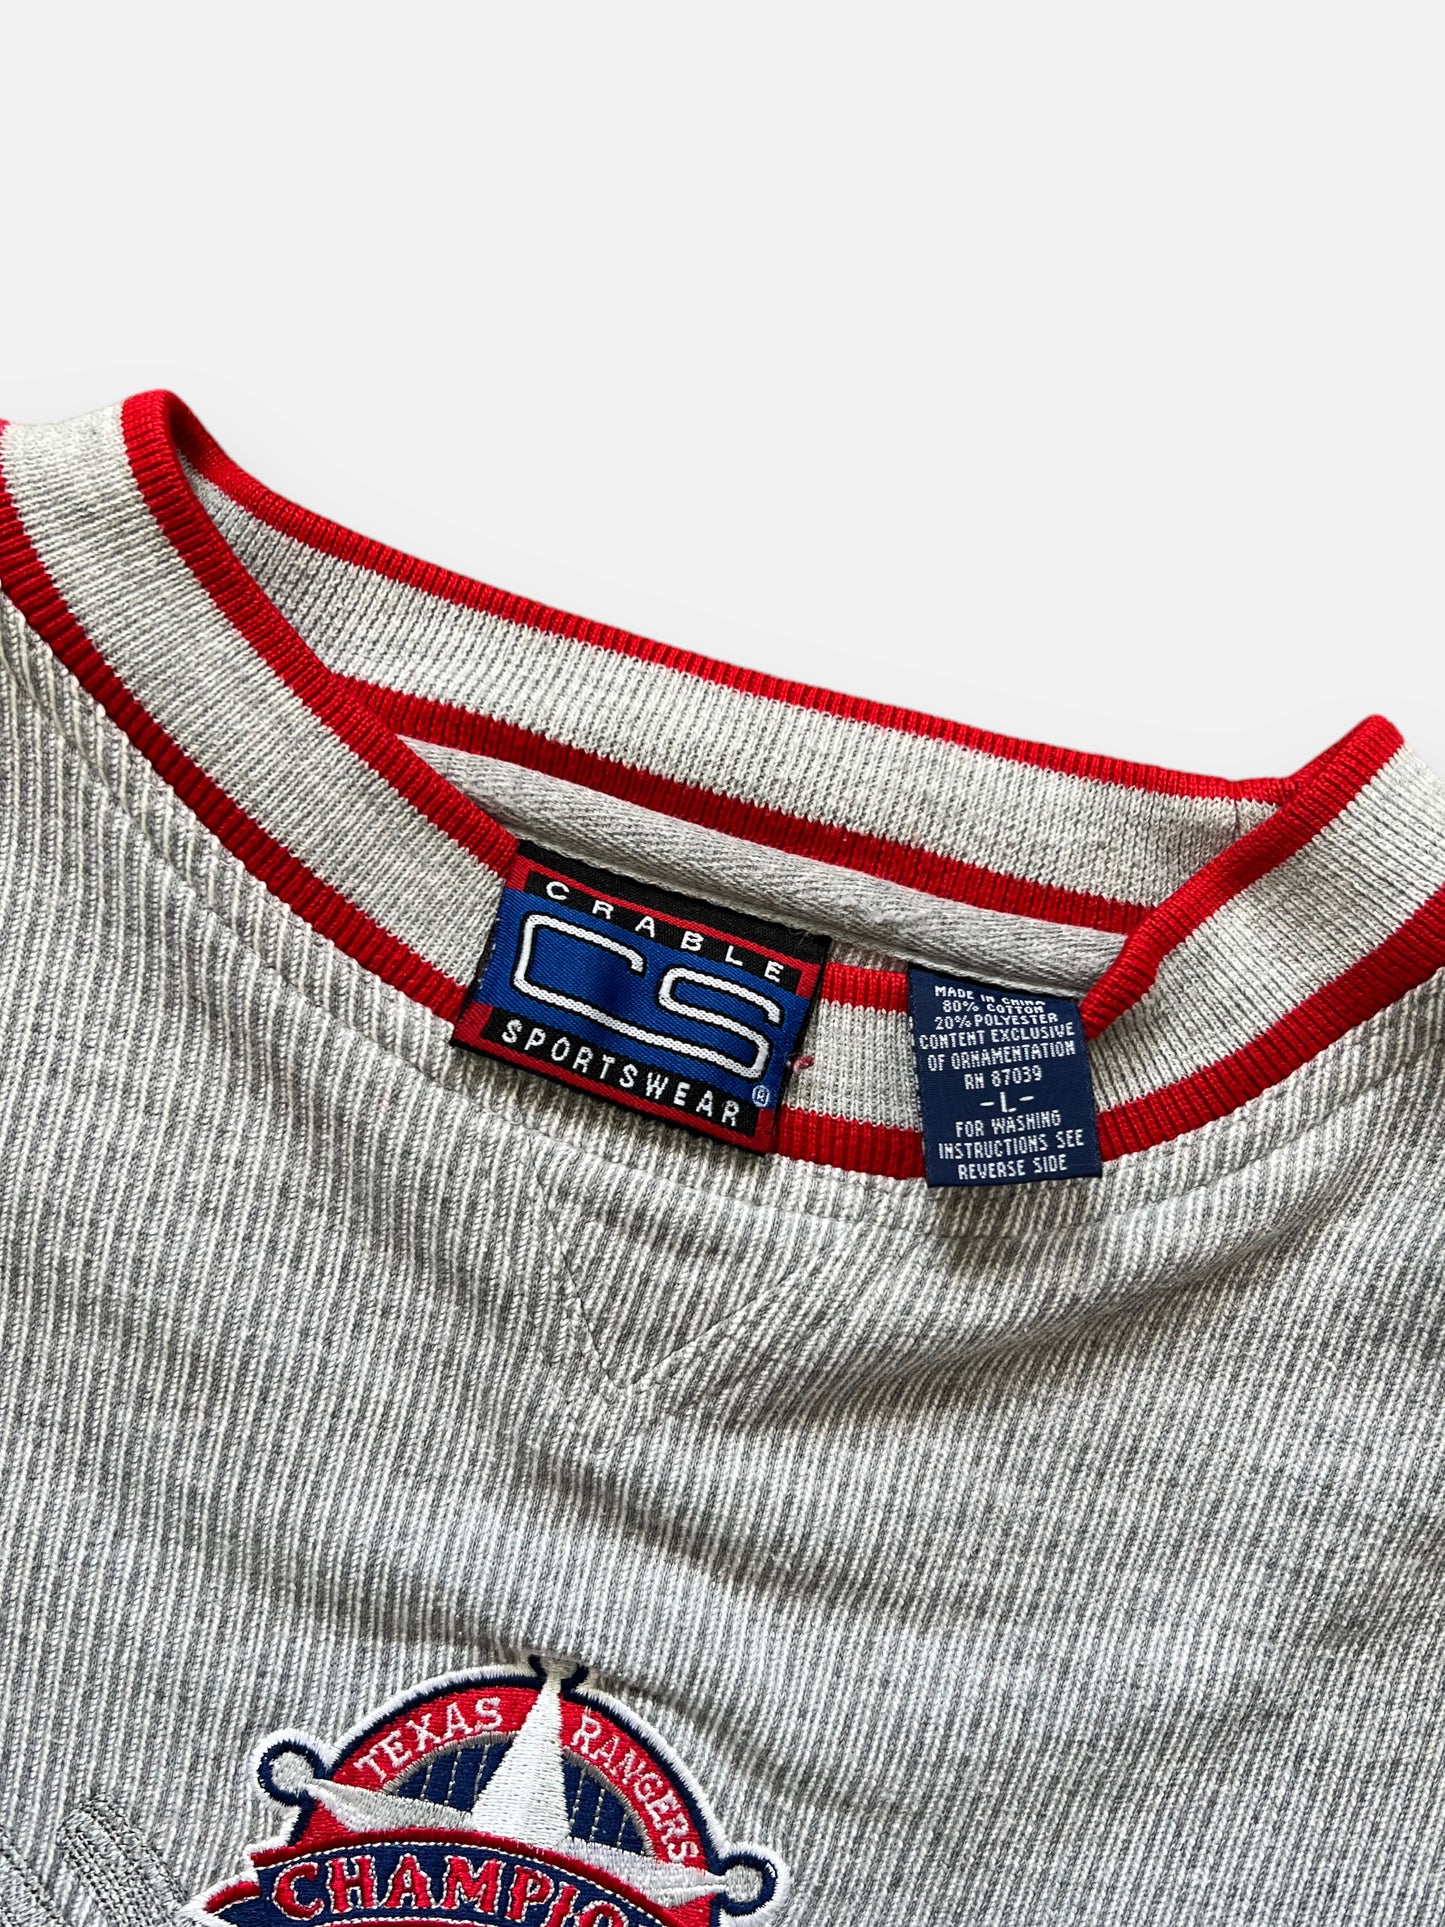 '95 Texas Rangers Sweatshirt (L)